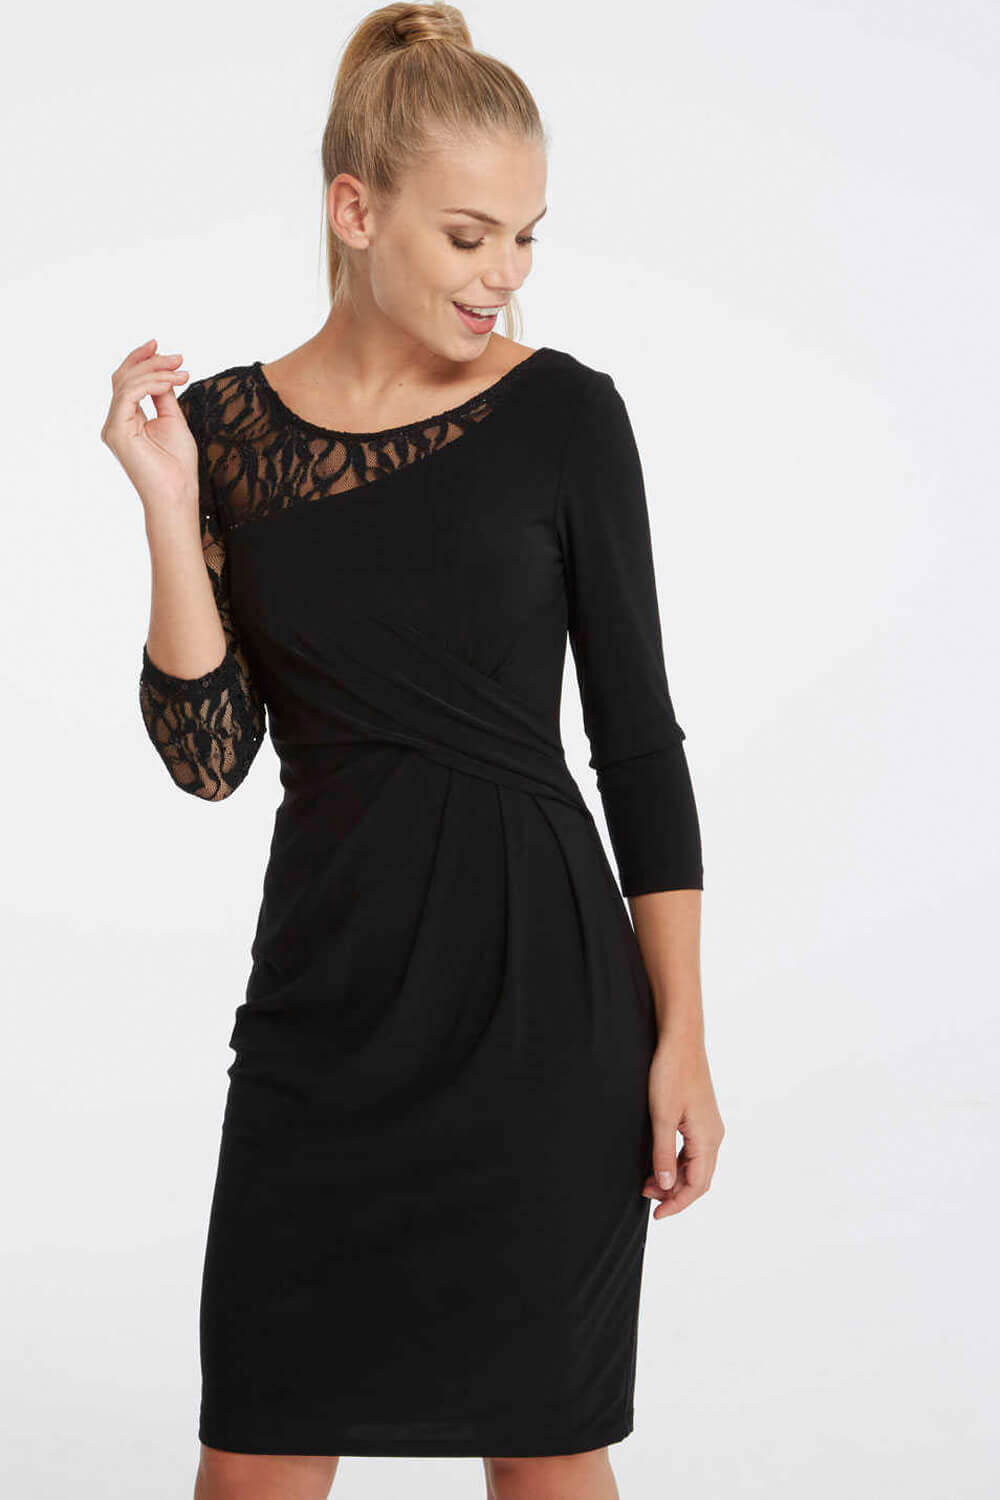 Lace Shoulder Contrast Dress in Black - Roman Originals UK